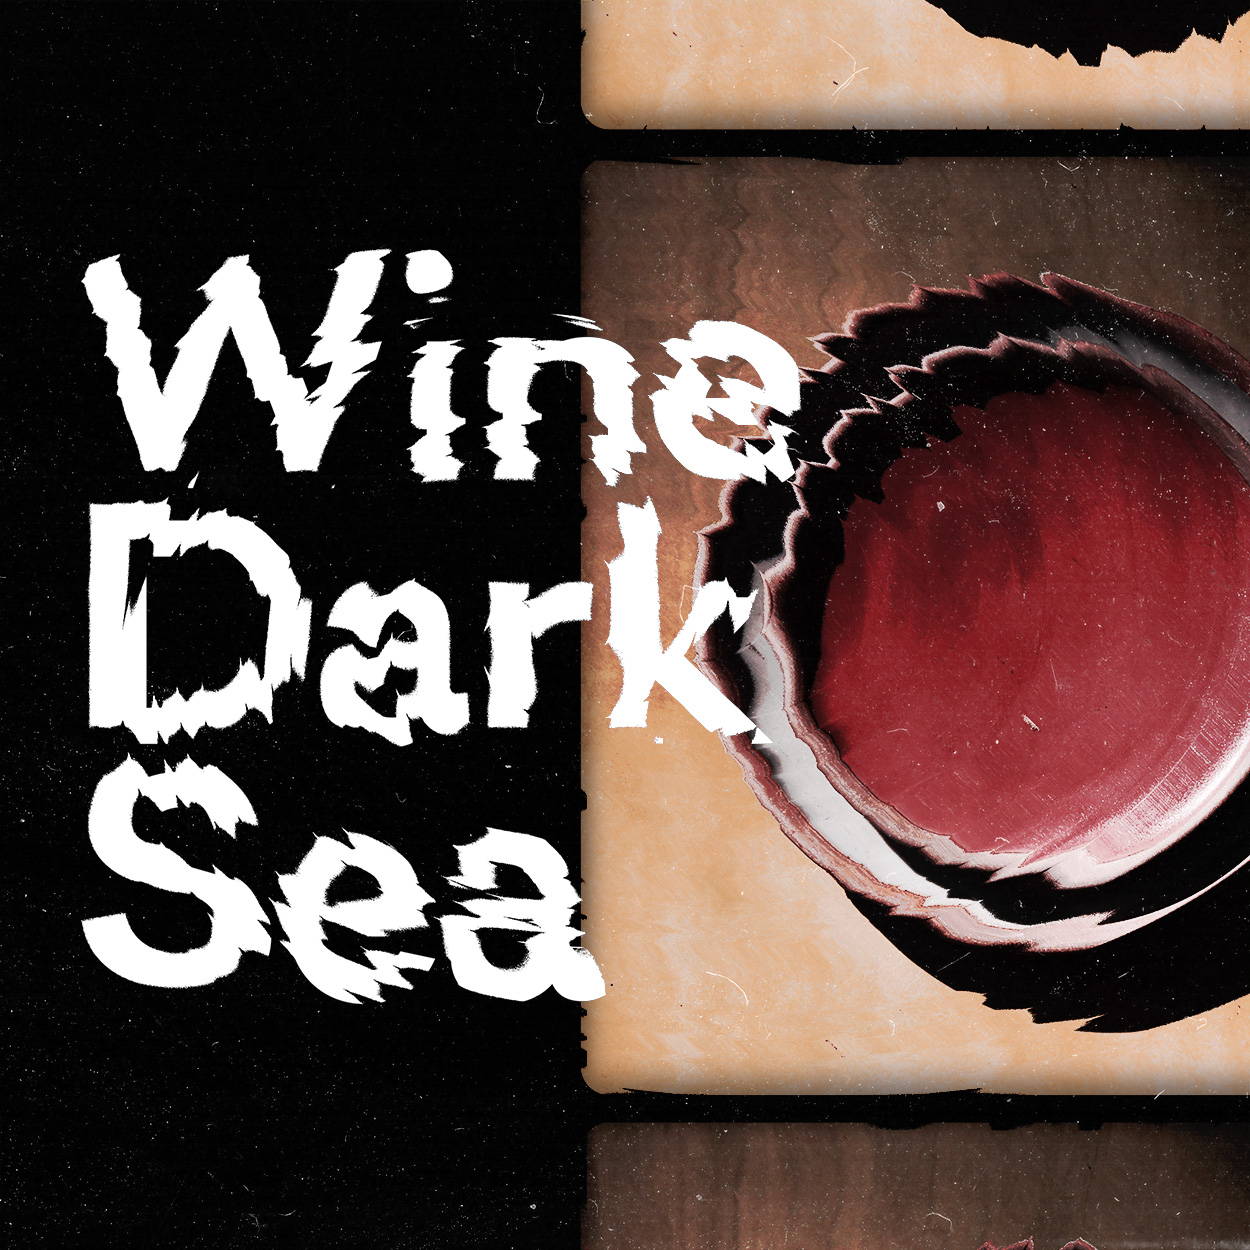 Wine Dark Sea playlist on Spotify by East Fork